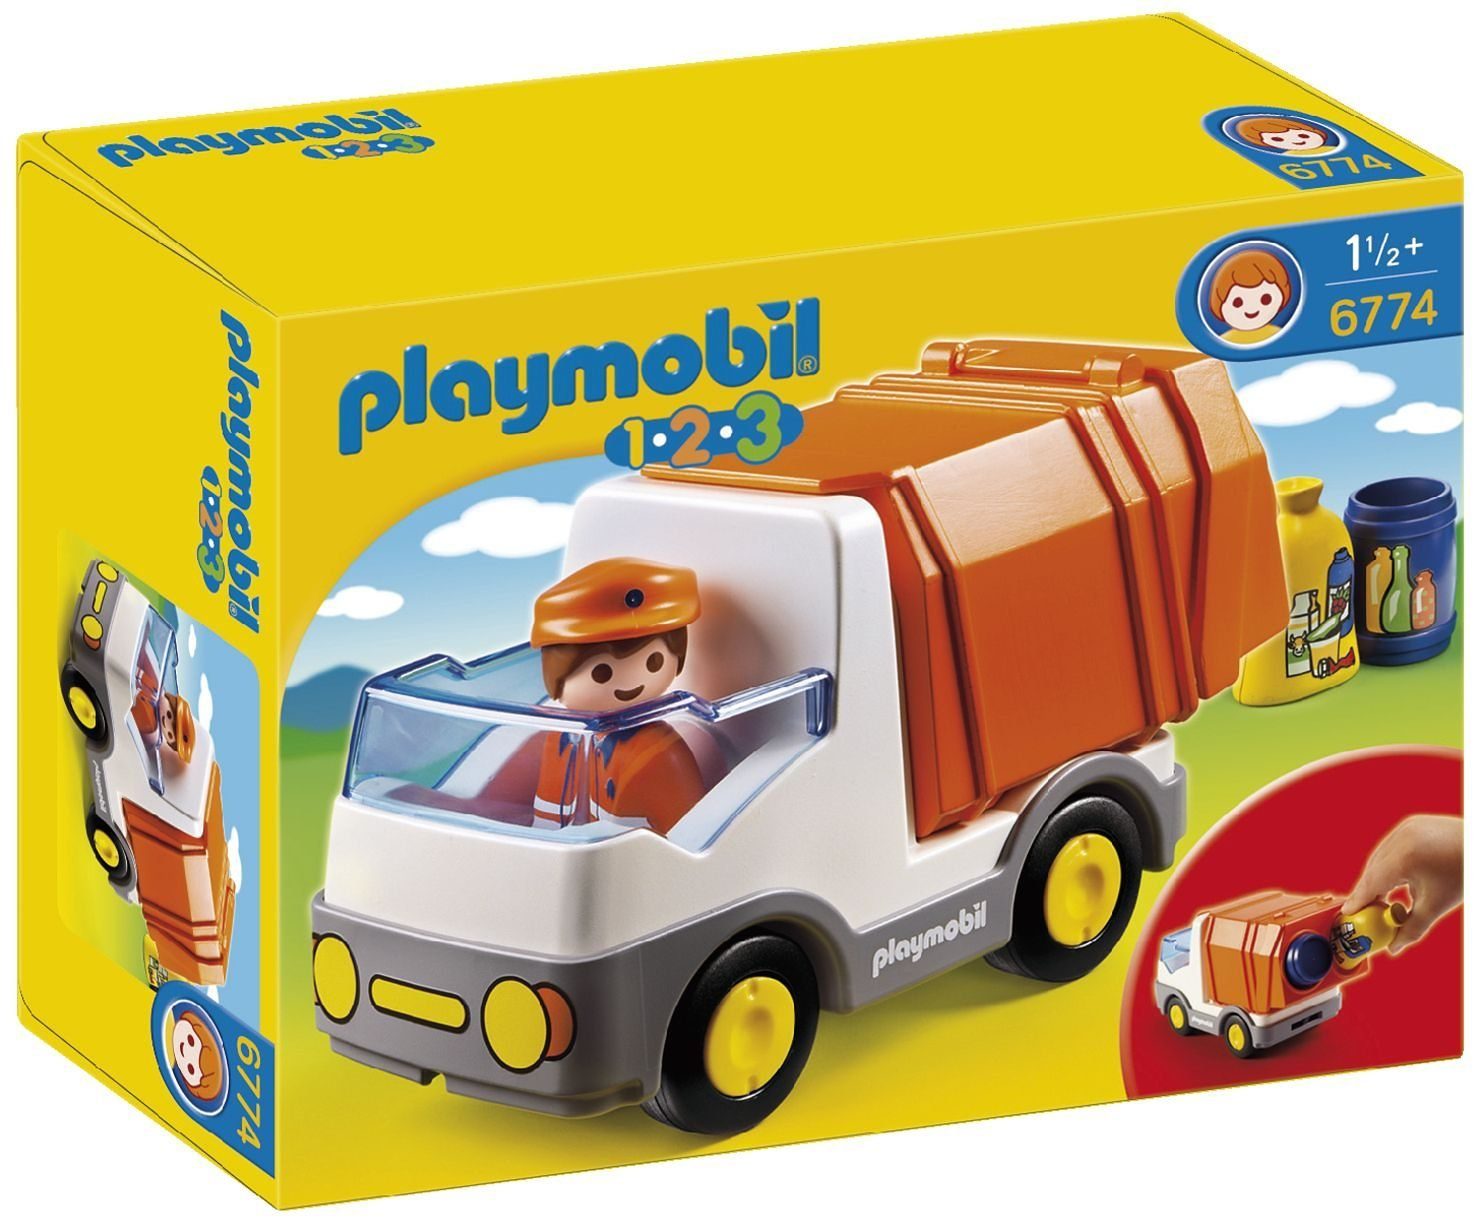 Playmobil® Konstruktions-Spielset Müllauto (6774), Playmobil 1-2-3, Made in  Europe, Sortierfunktion fördert Logik und Motorik Ihres Kindes